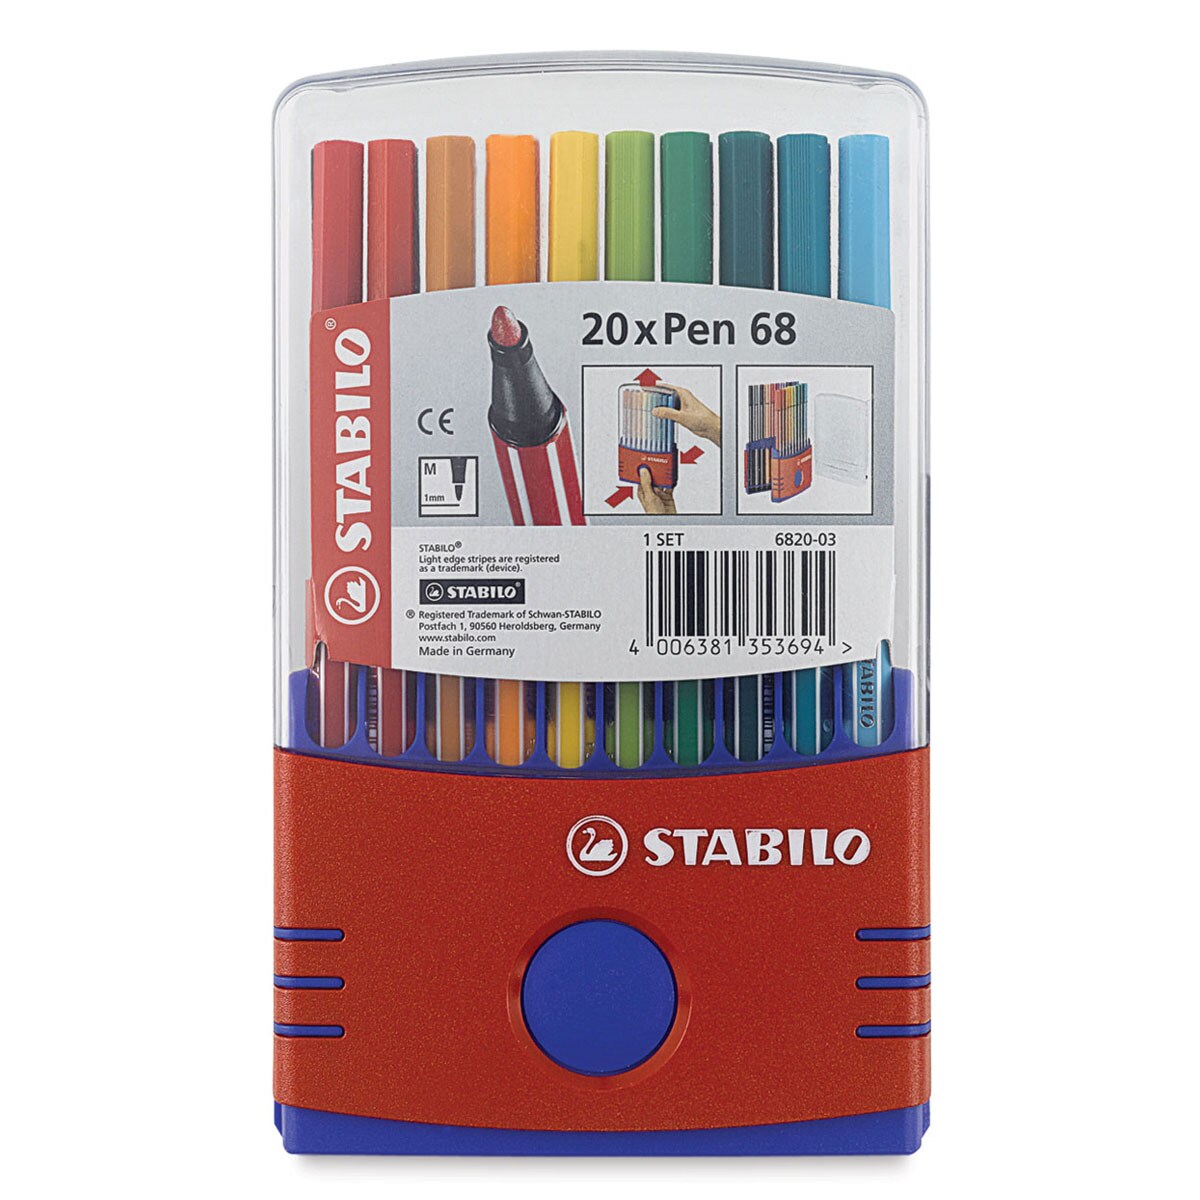 Stabilo Pen 68 Set - Assorted Colors, Color Parade, Set of 20